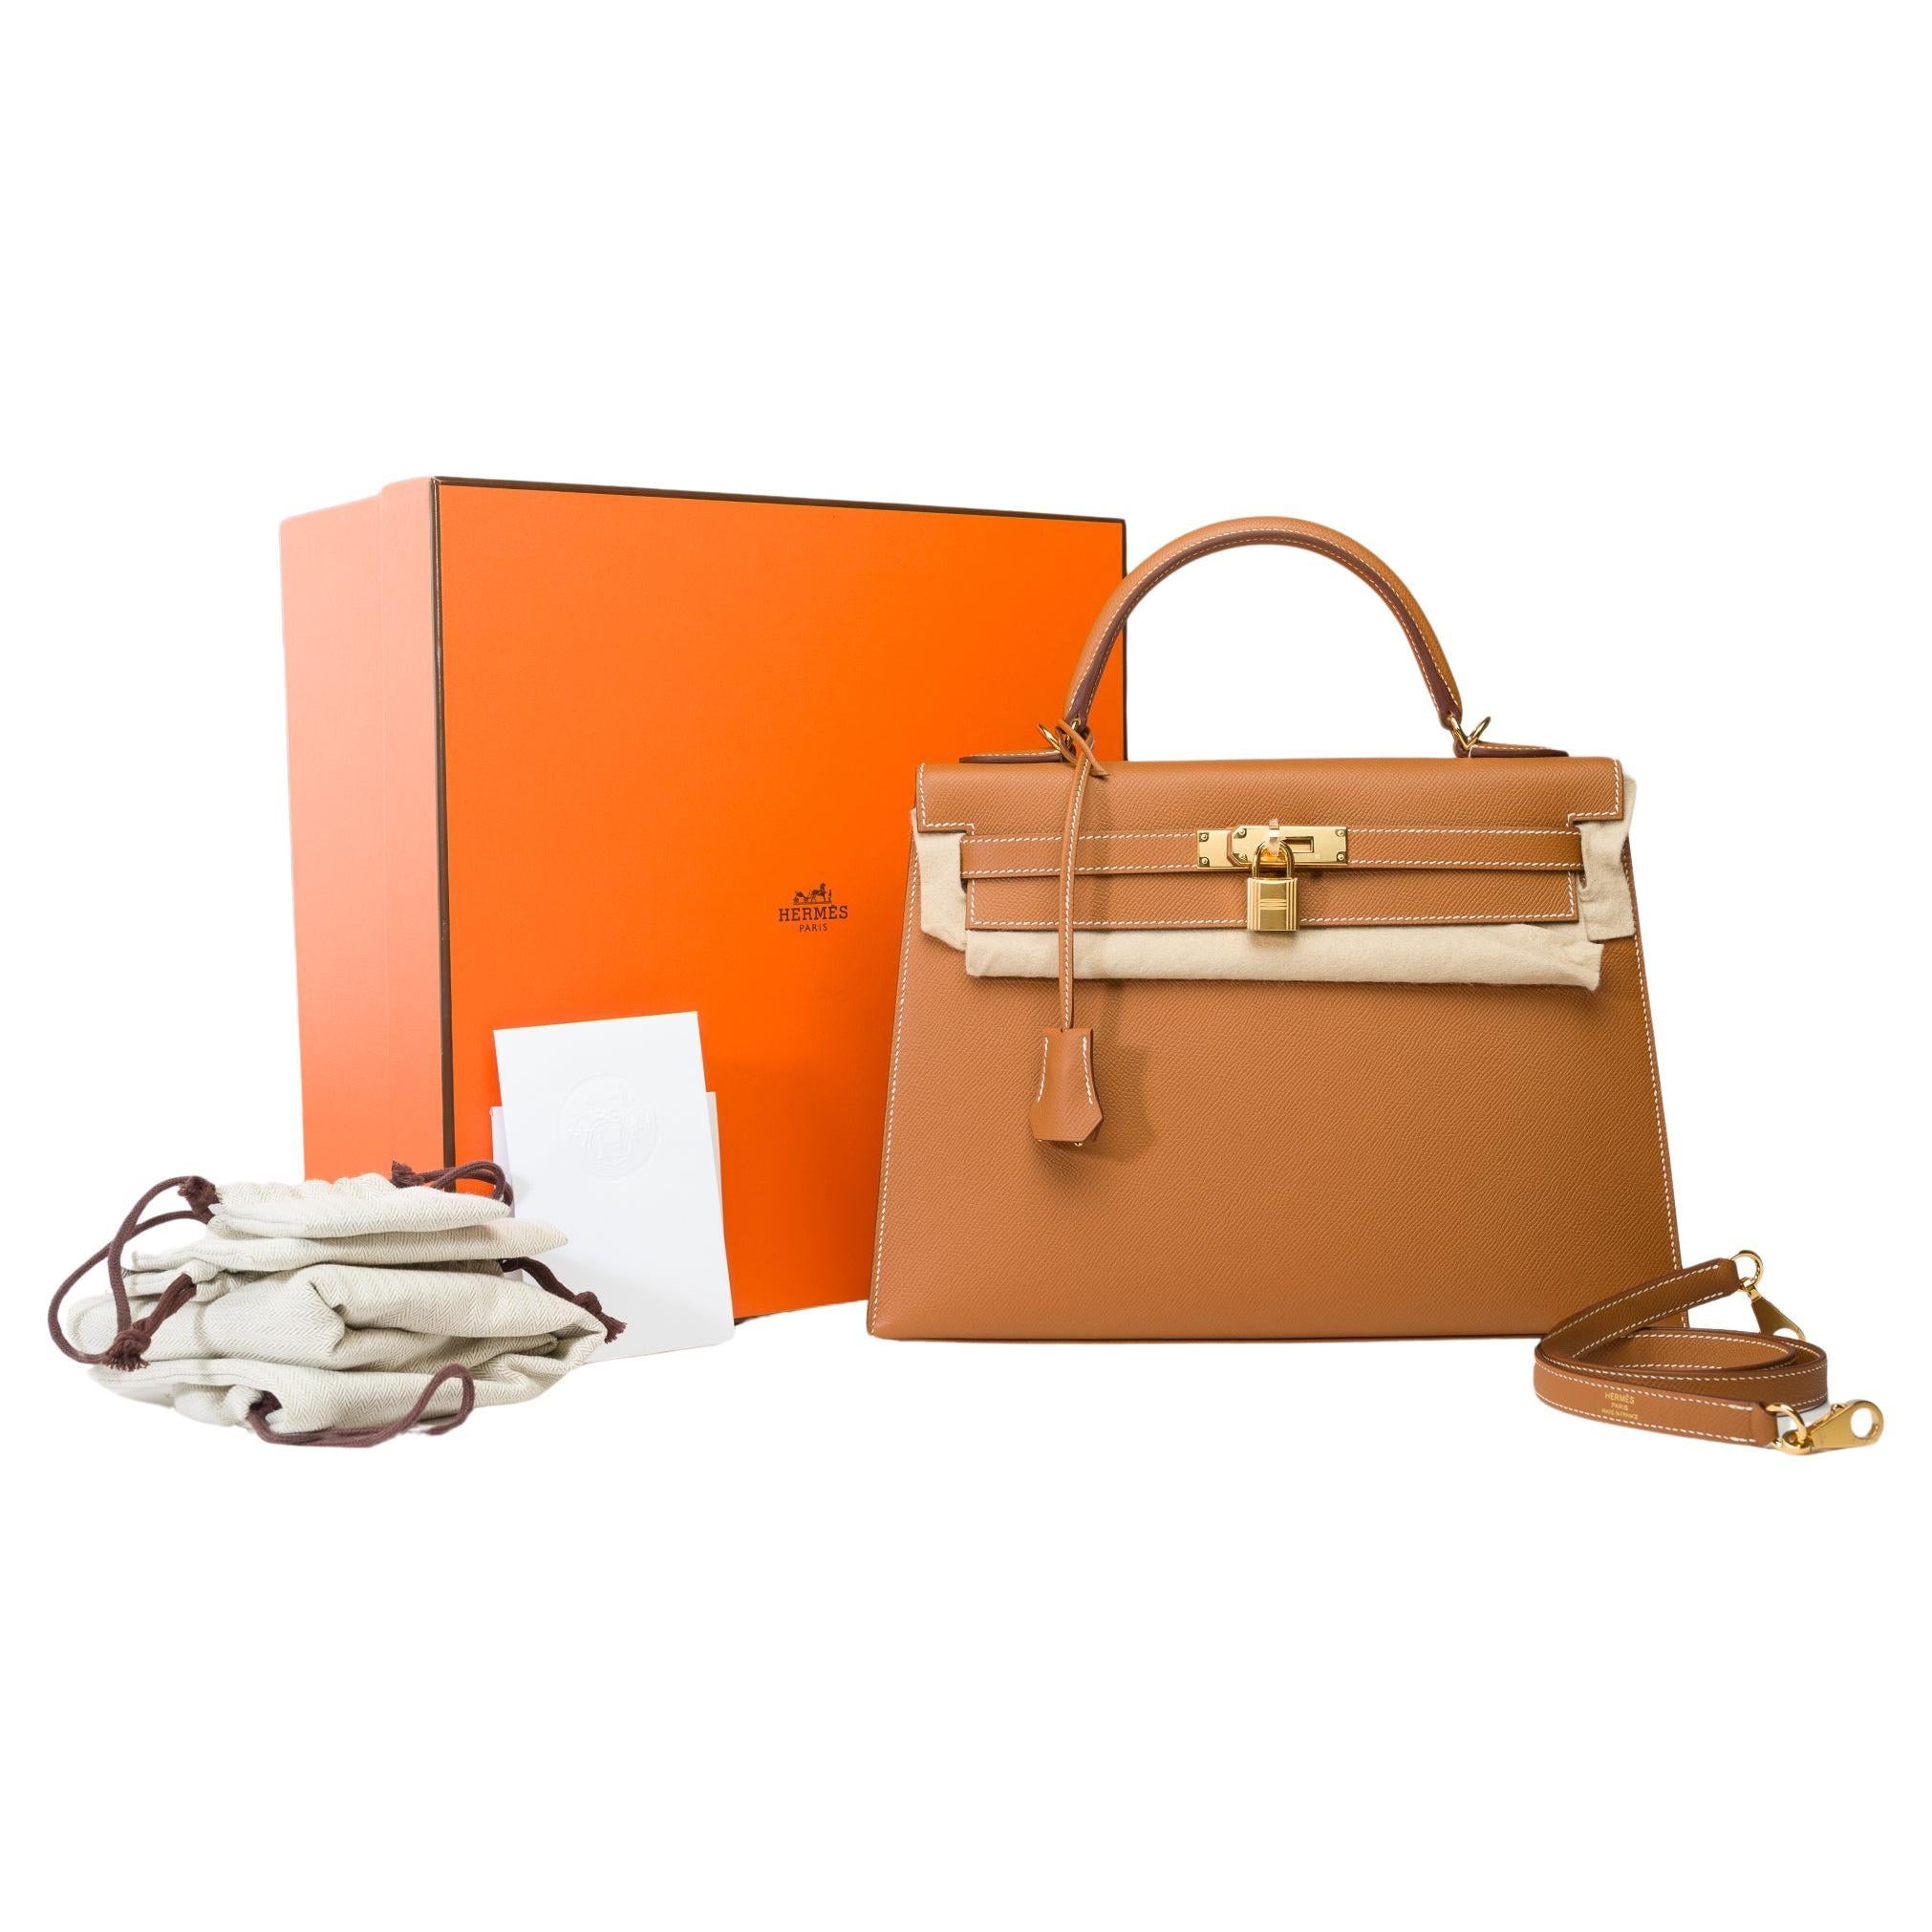 New Hermès Kelly 32 sellier handbag strap in Camel Epsom calf leather, GHW For Sale